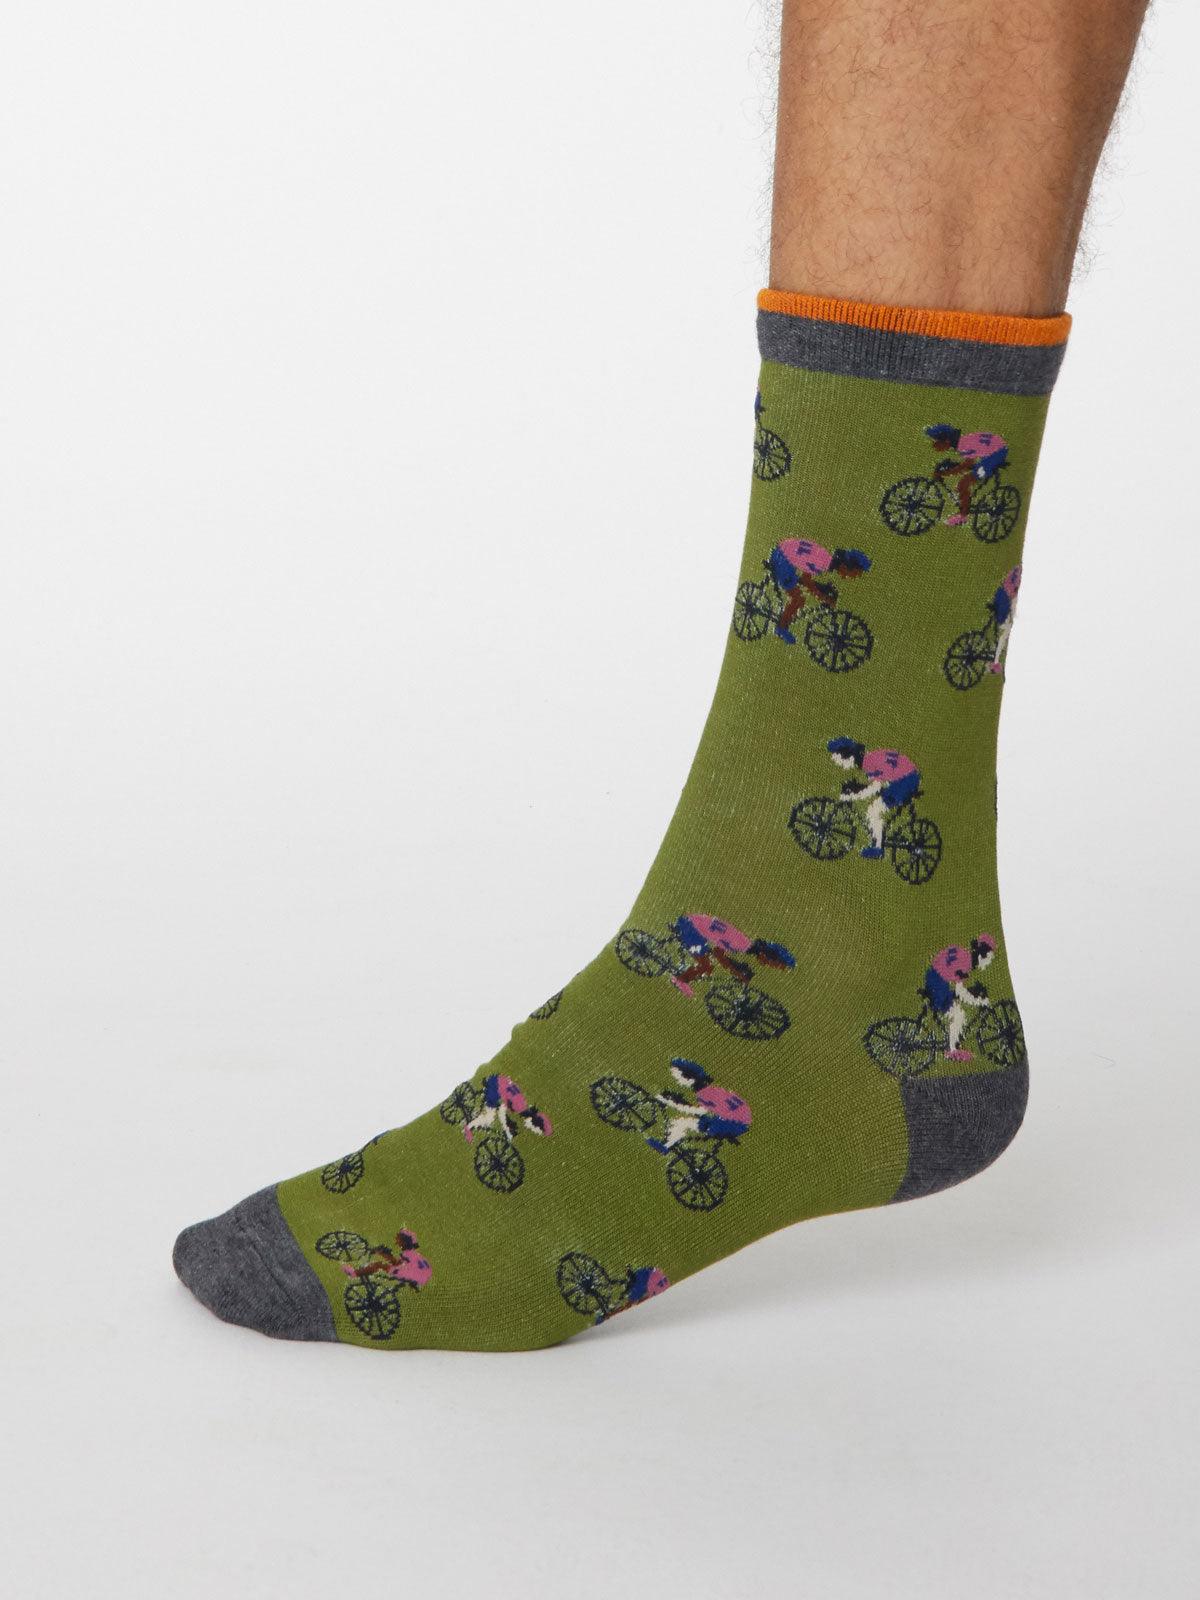 Garra De Bici Socks - Olive Green - Thought Clothing UK